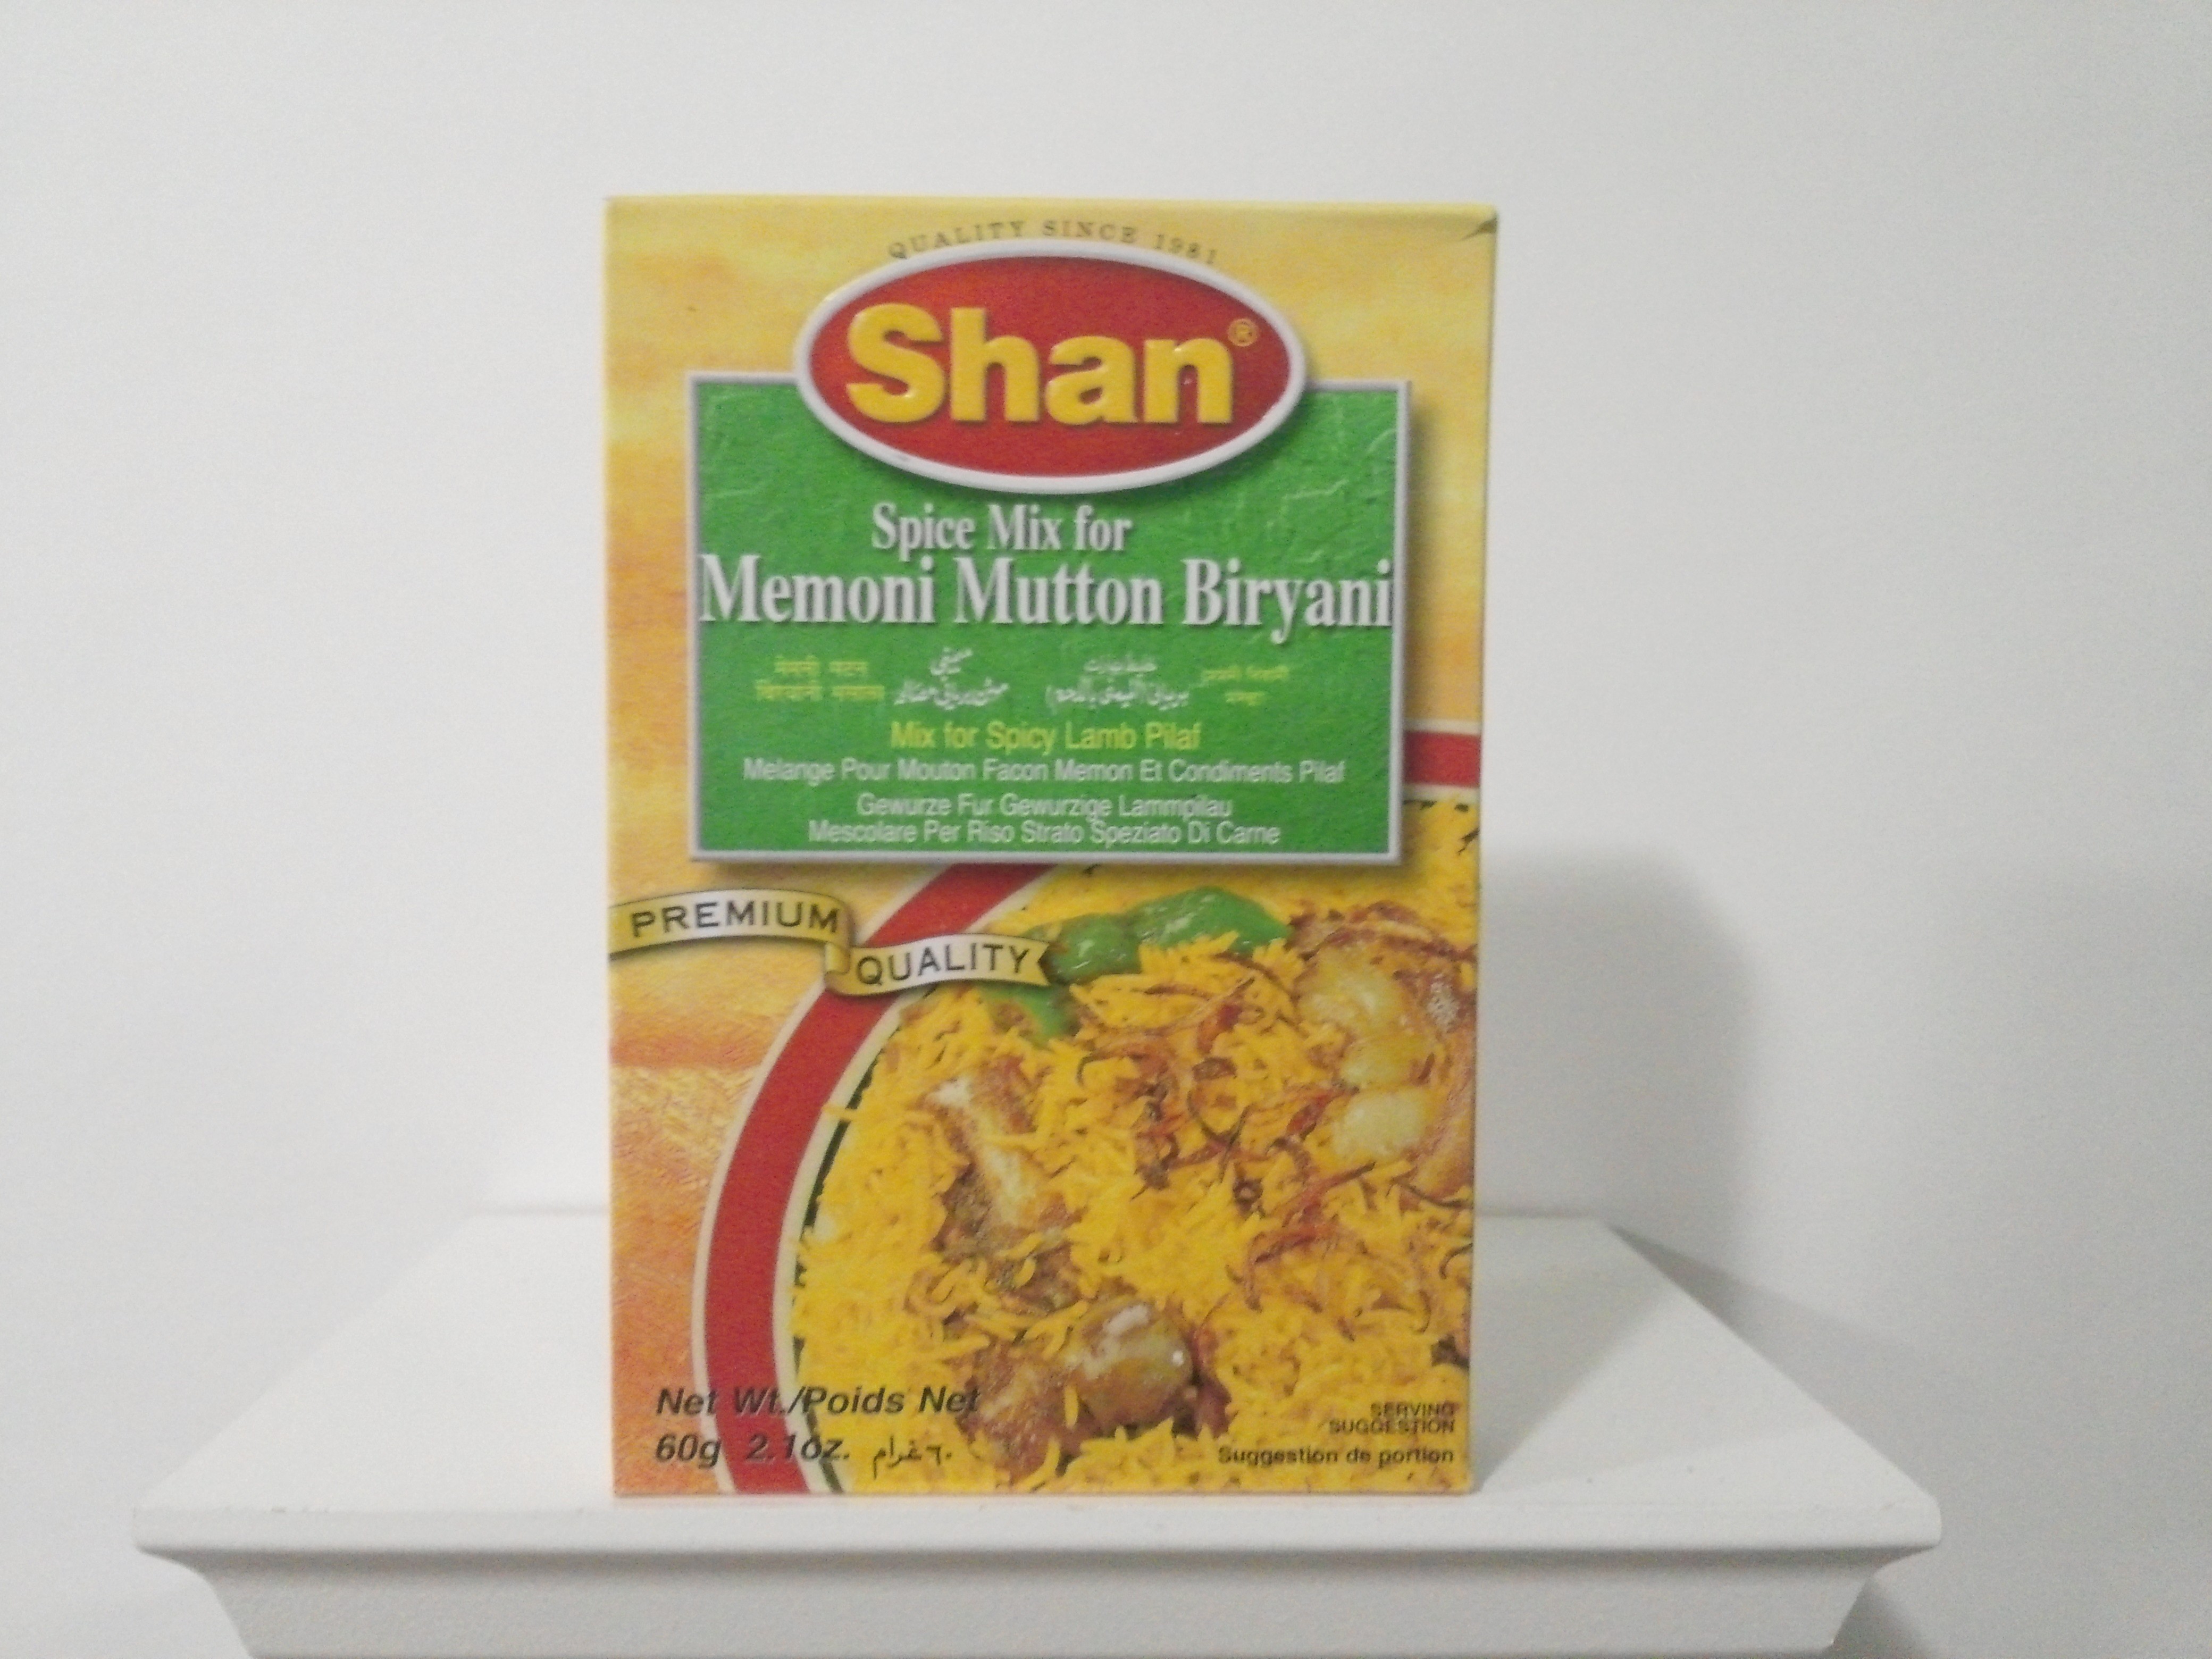 Shan Memoni Mutton Biryani Spice Mix 50 grm   